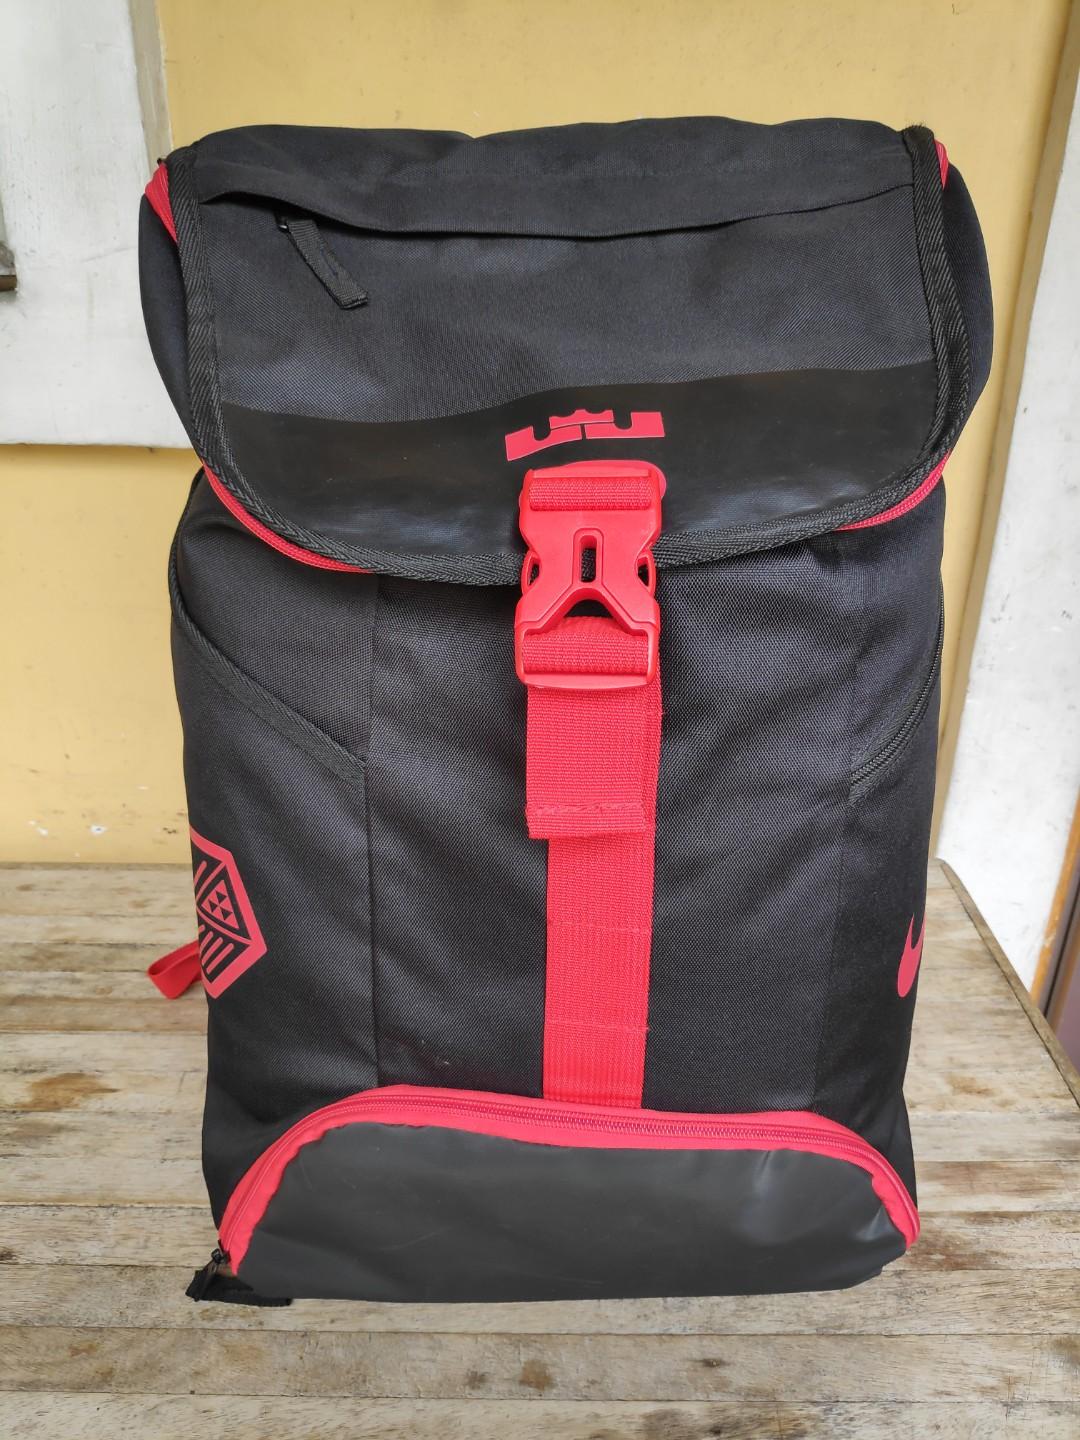 lebron backpack red